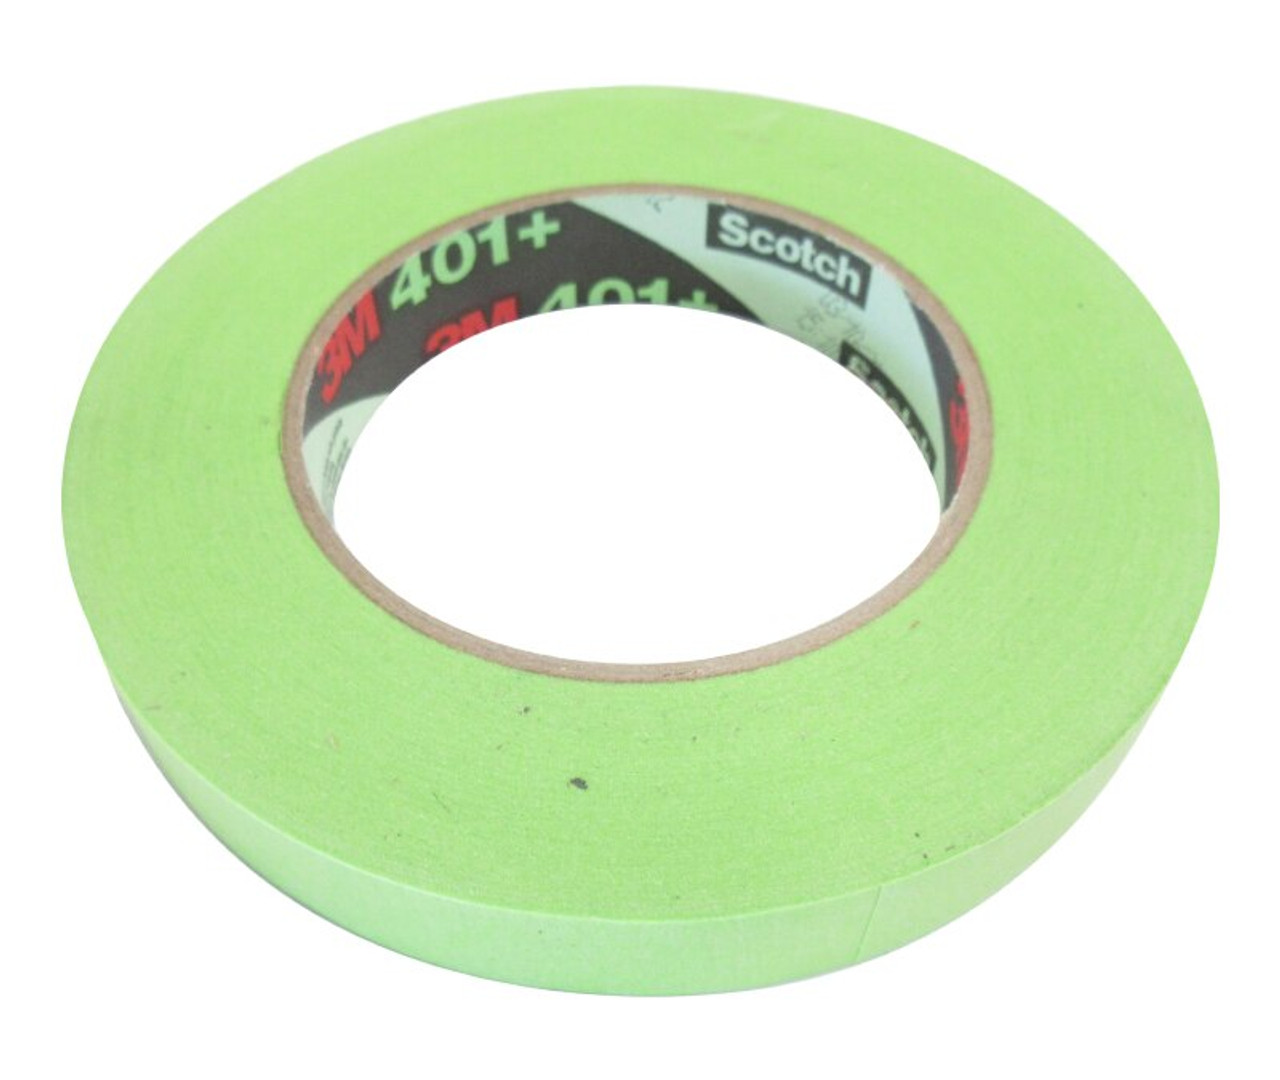 3M 401+ High Performance Green Masking Tape